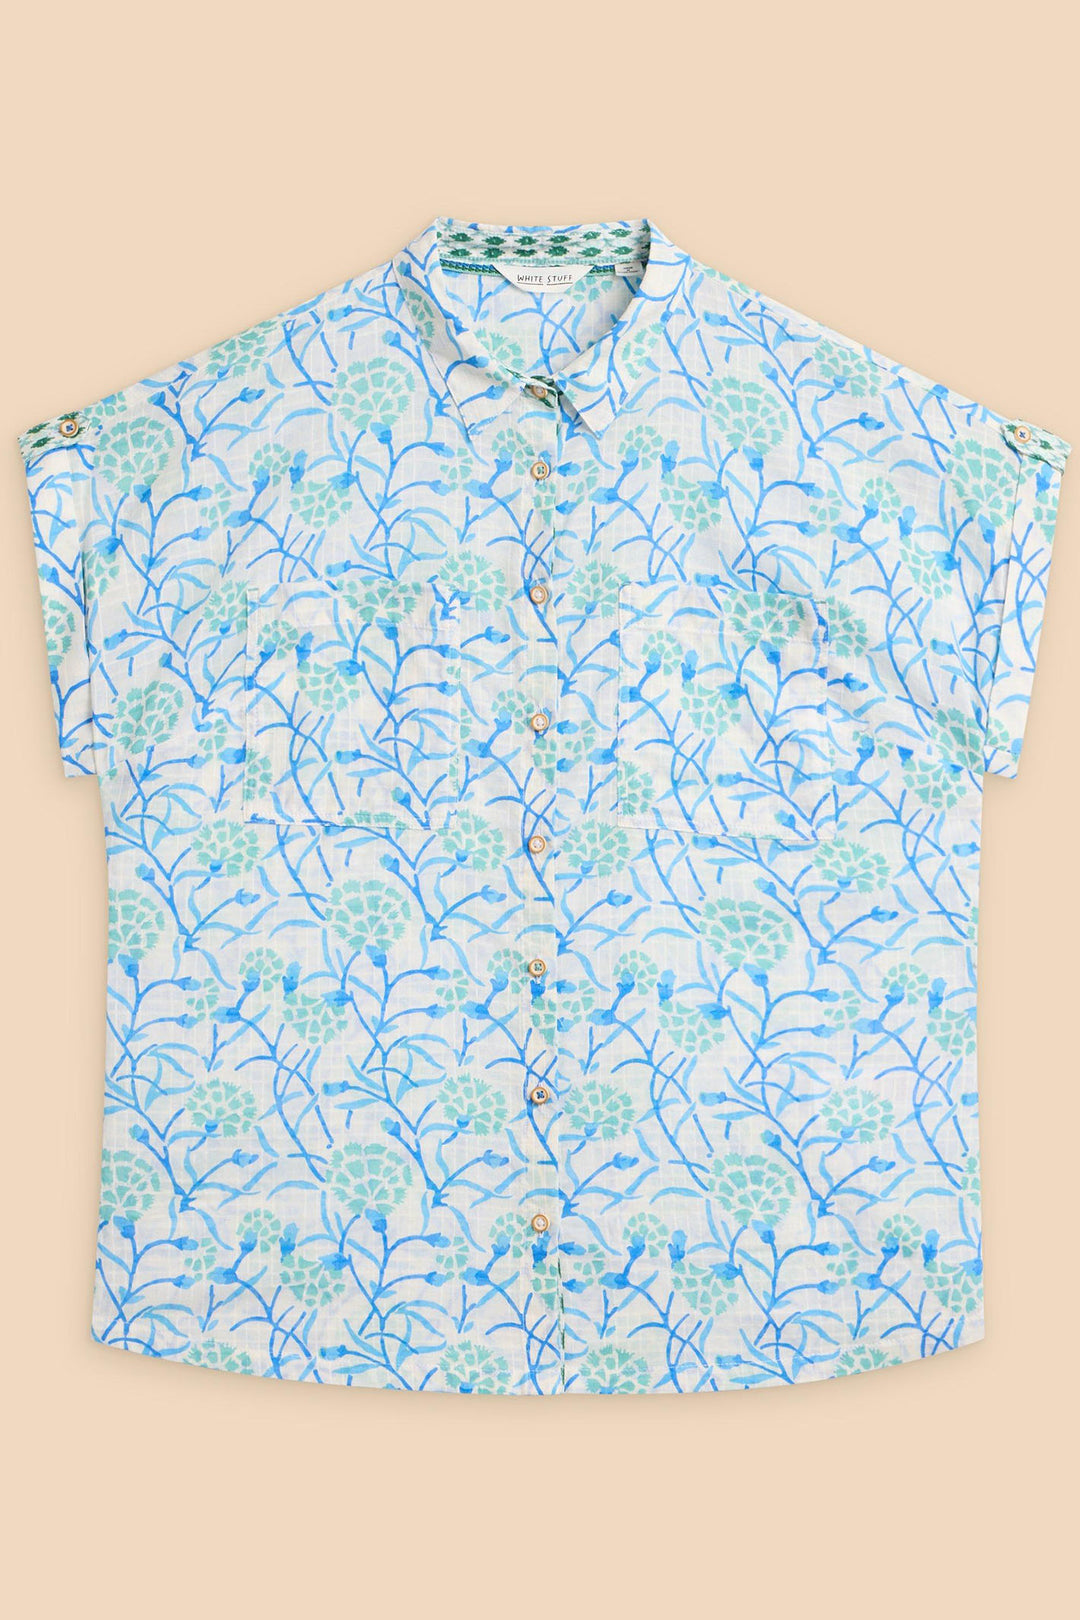 White Stuff 440875 Ellie Ivory Turquoise Print Organic Cotton Shirt - Shirley Allum Boutique